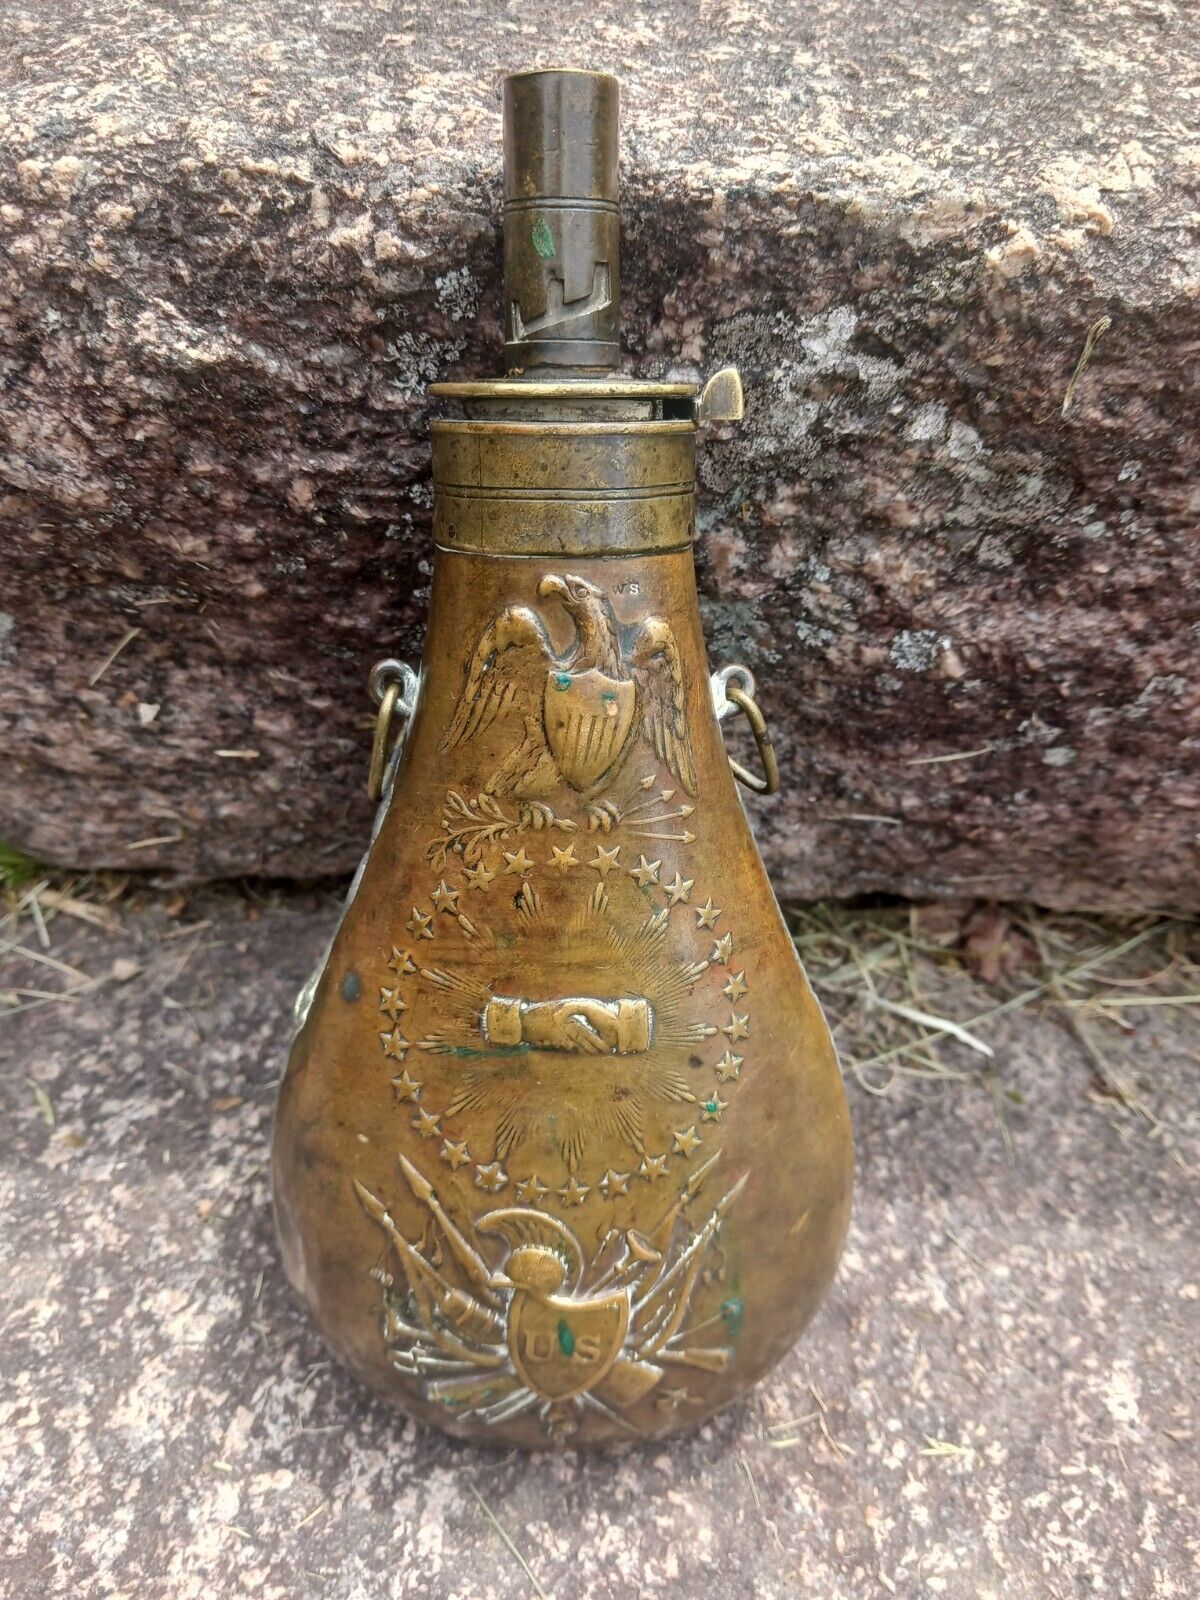 Early Antique N.P. Ames 1838 U.S. Military Powder Flask Pre Civil War Era.